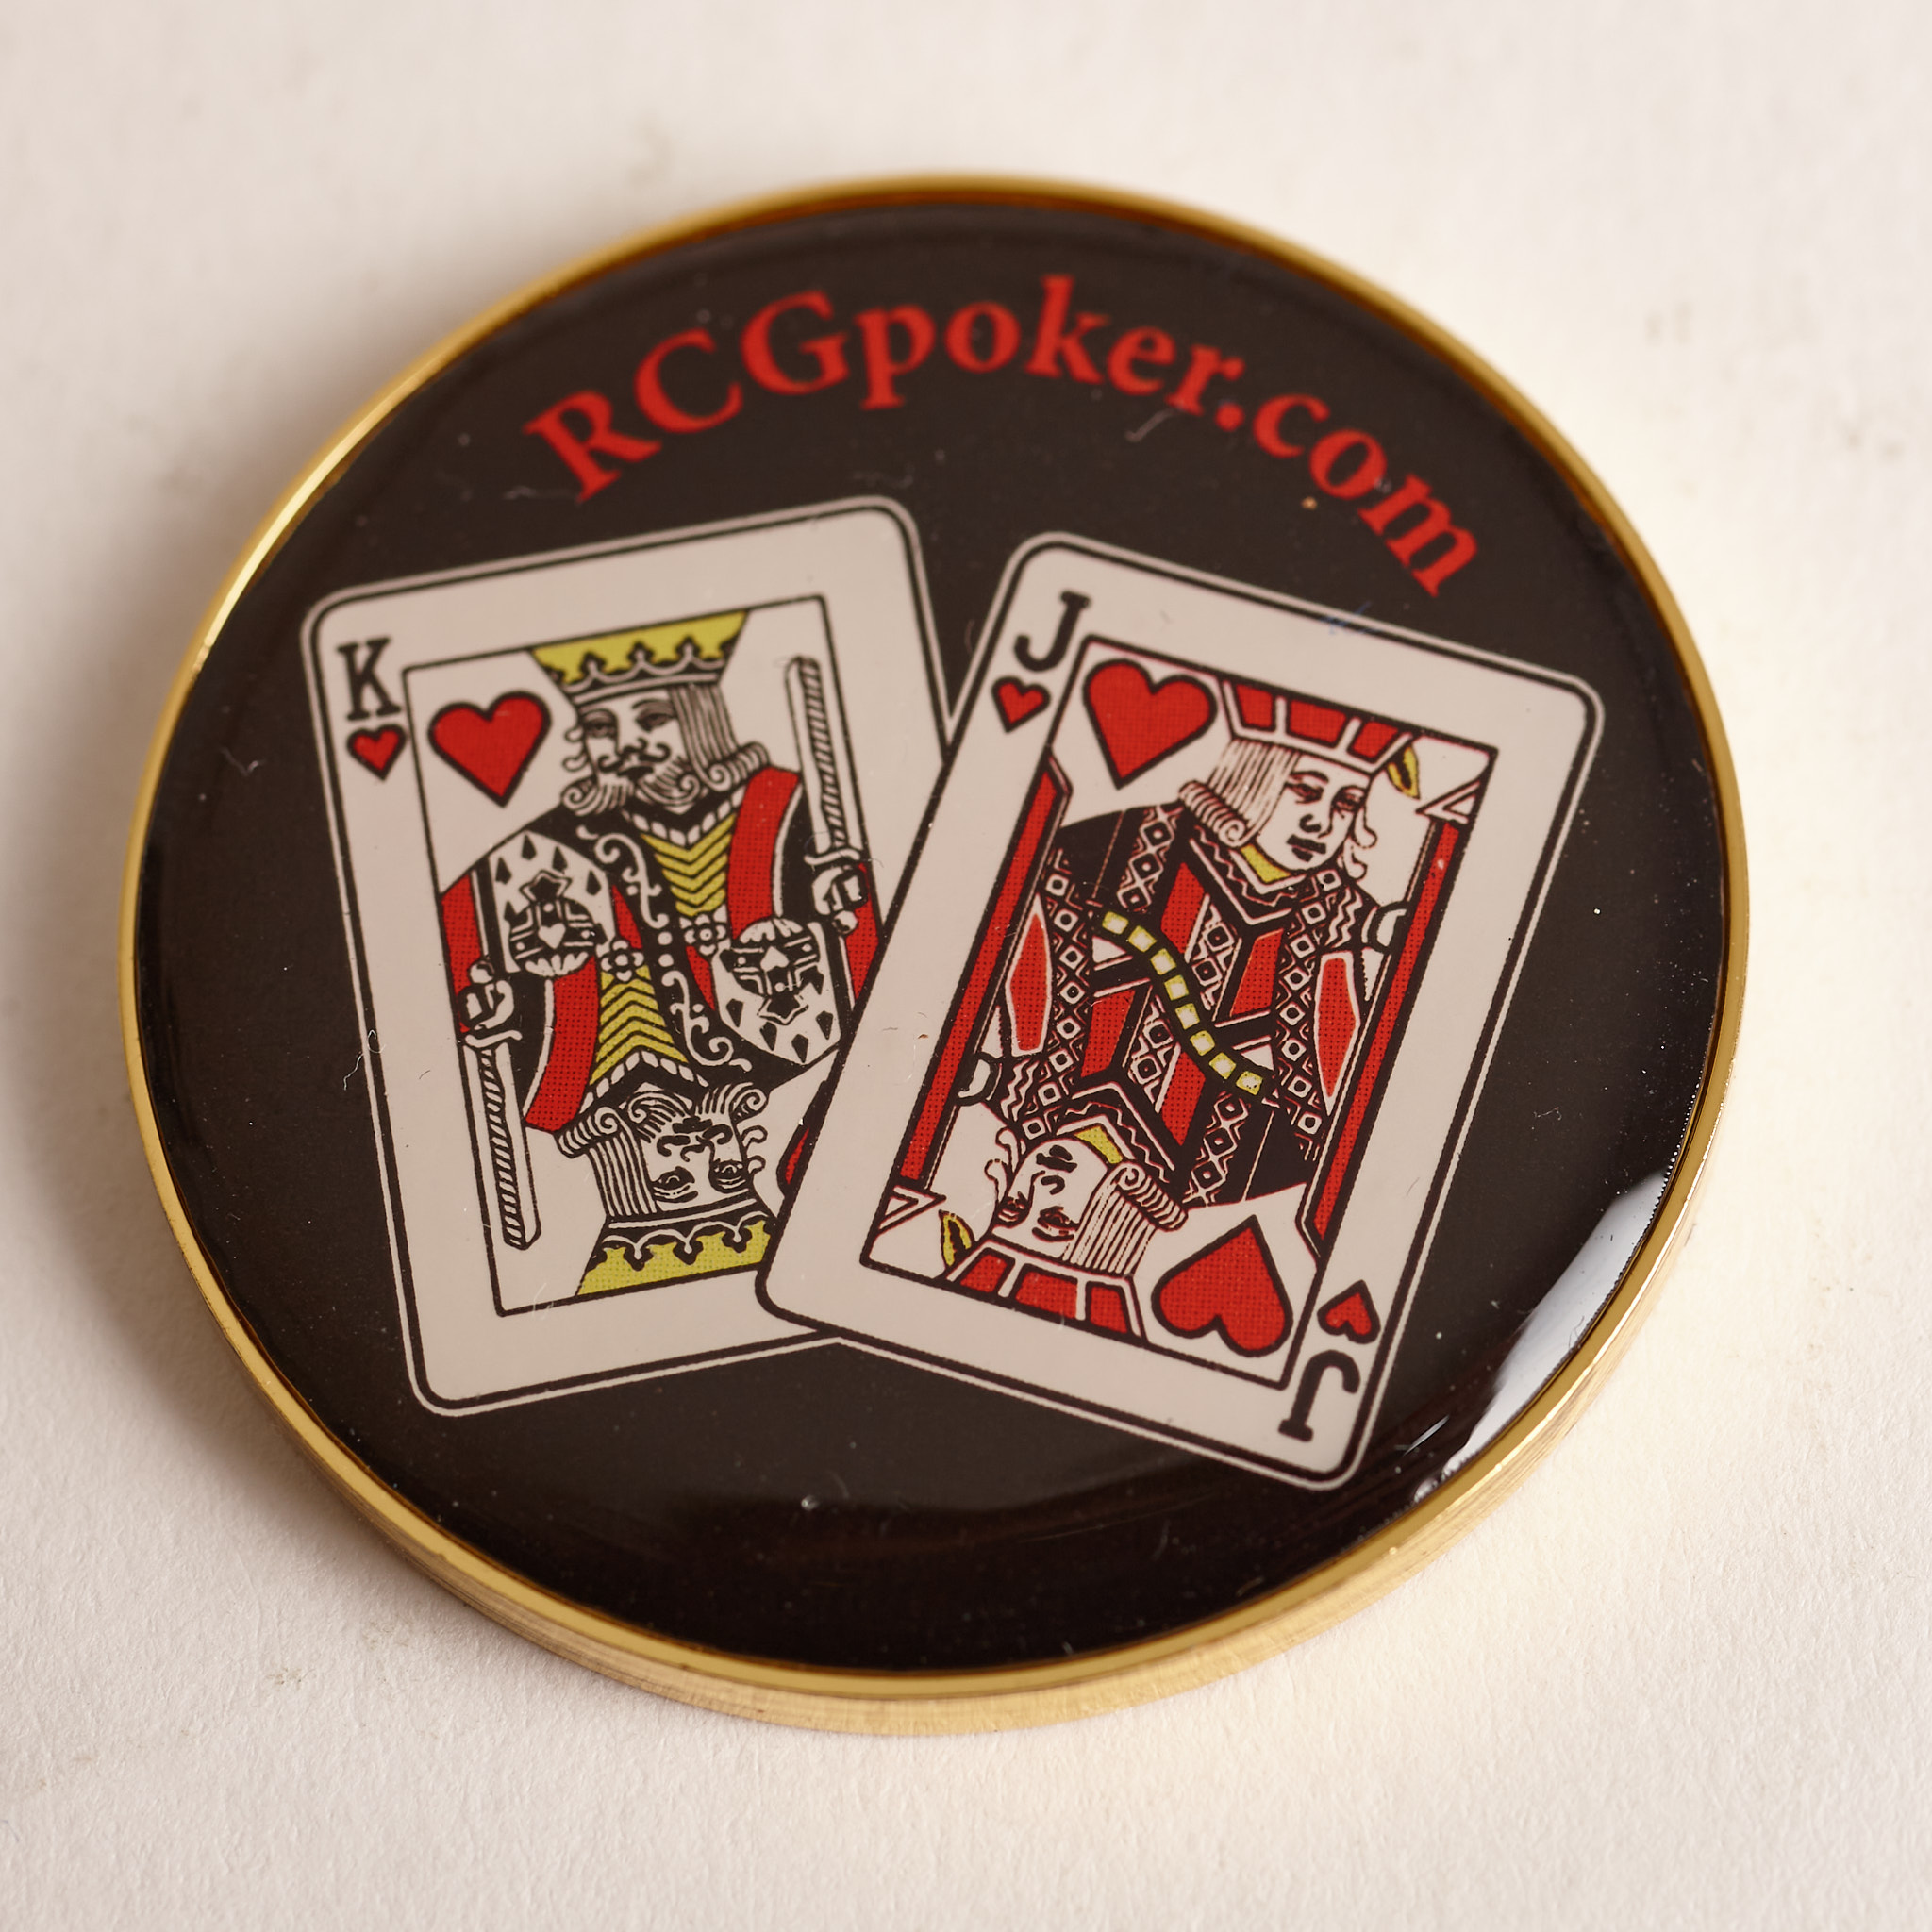 RCGpoker.com, Poker Card Guard